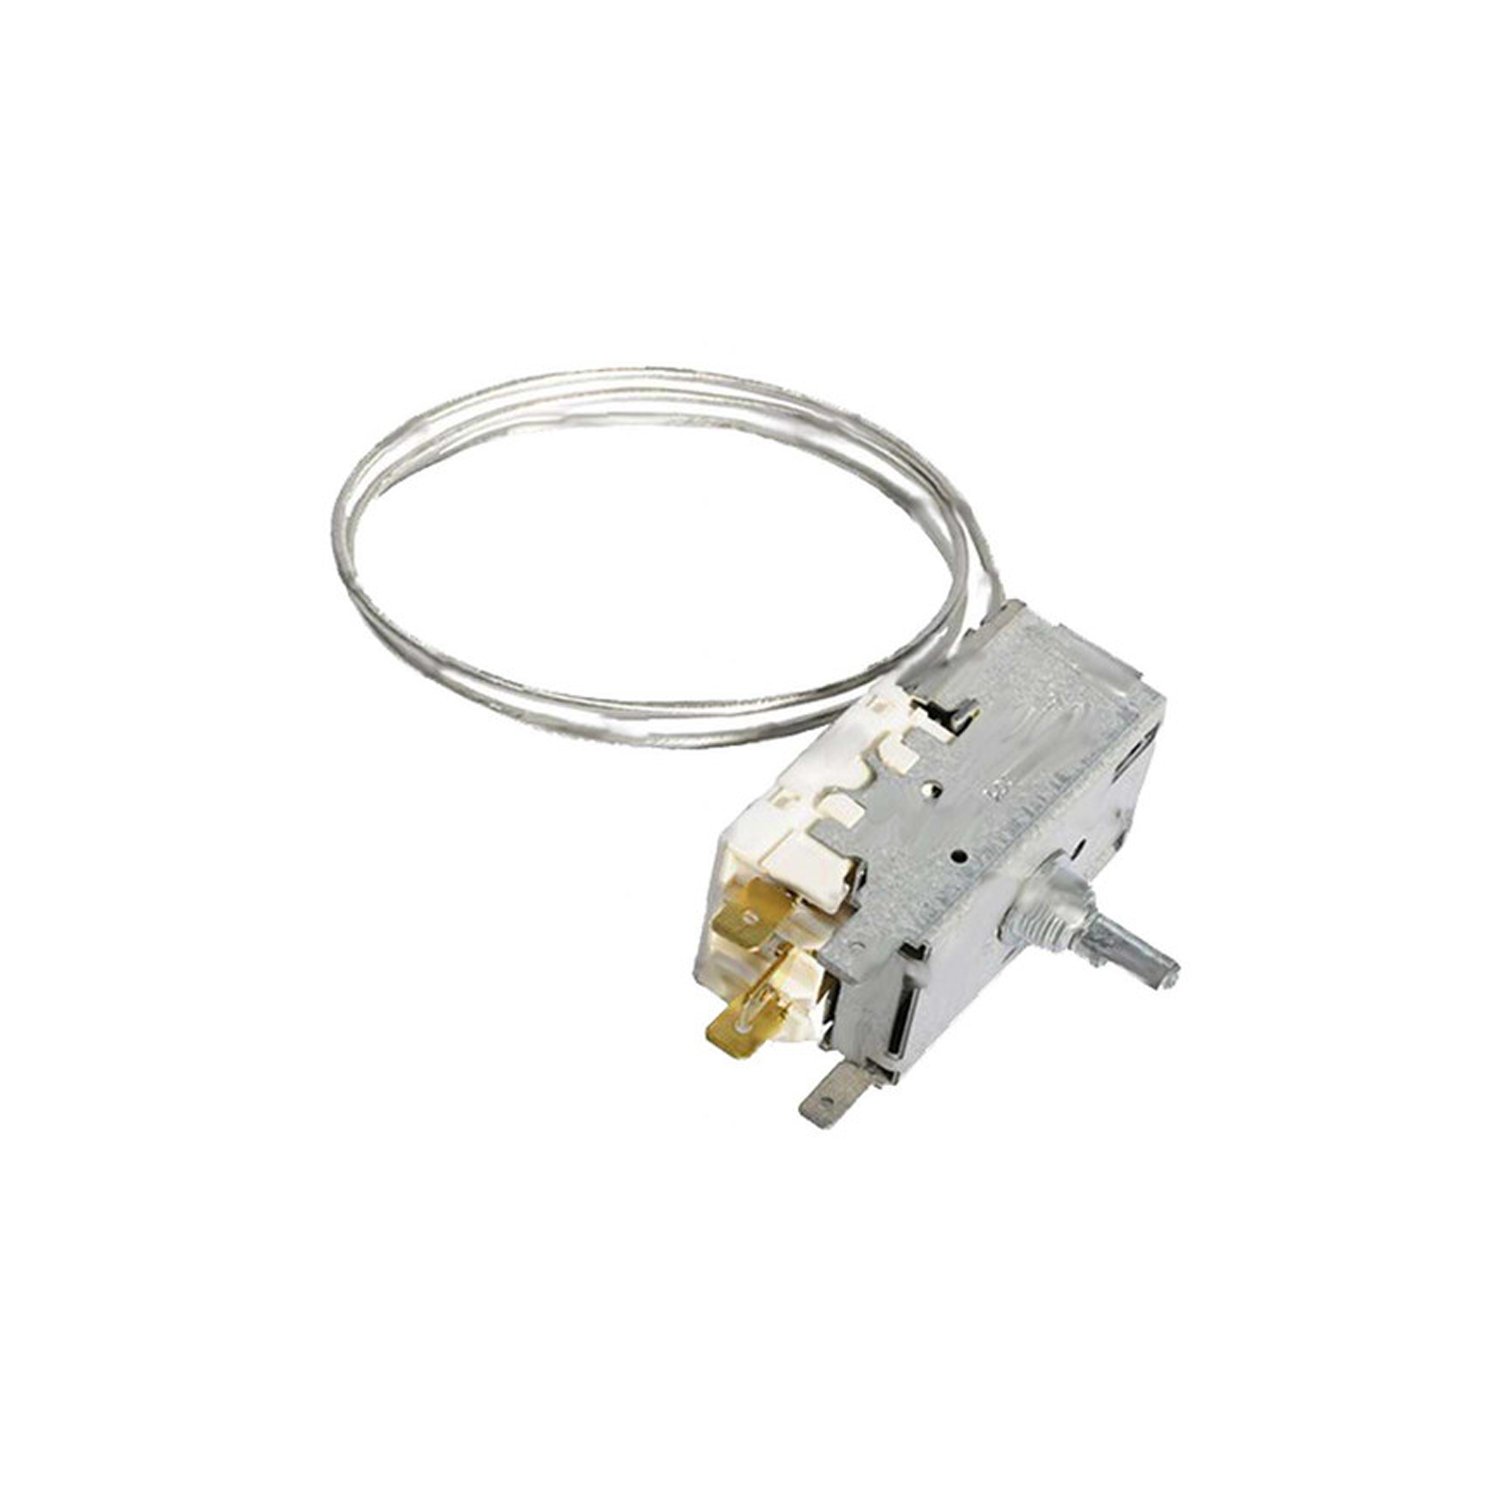 Thermostat ATEA A01 0043, probe ø 8mm probe length 120mm